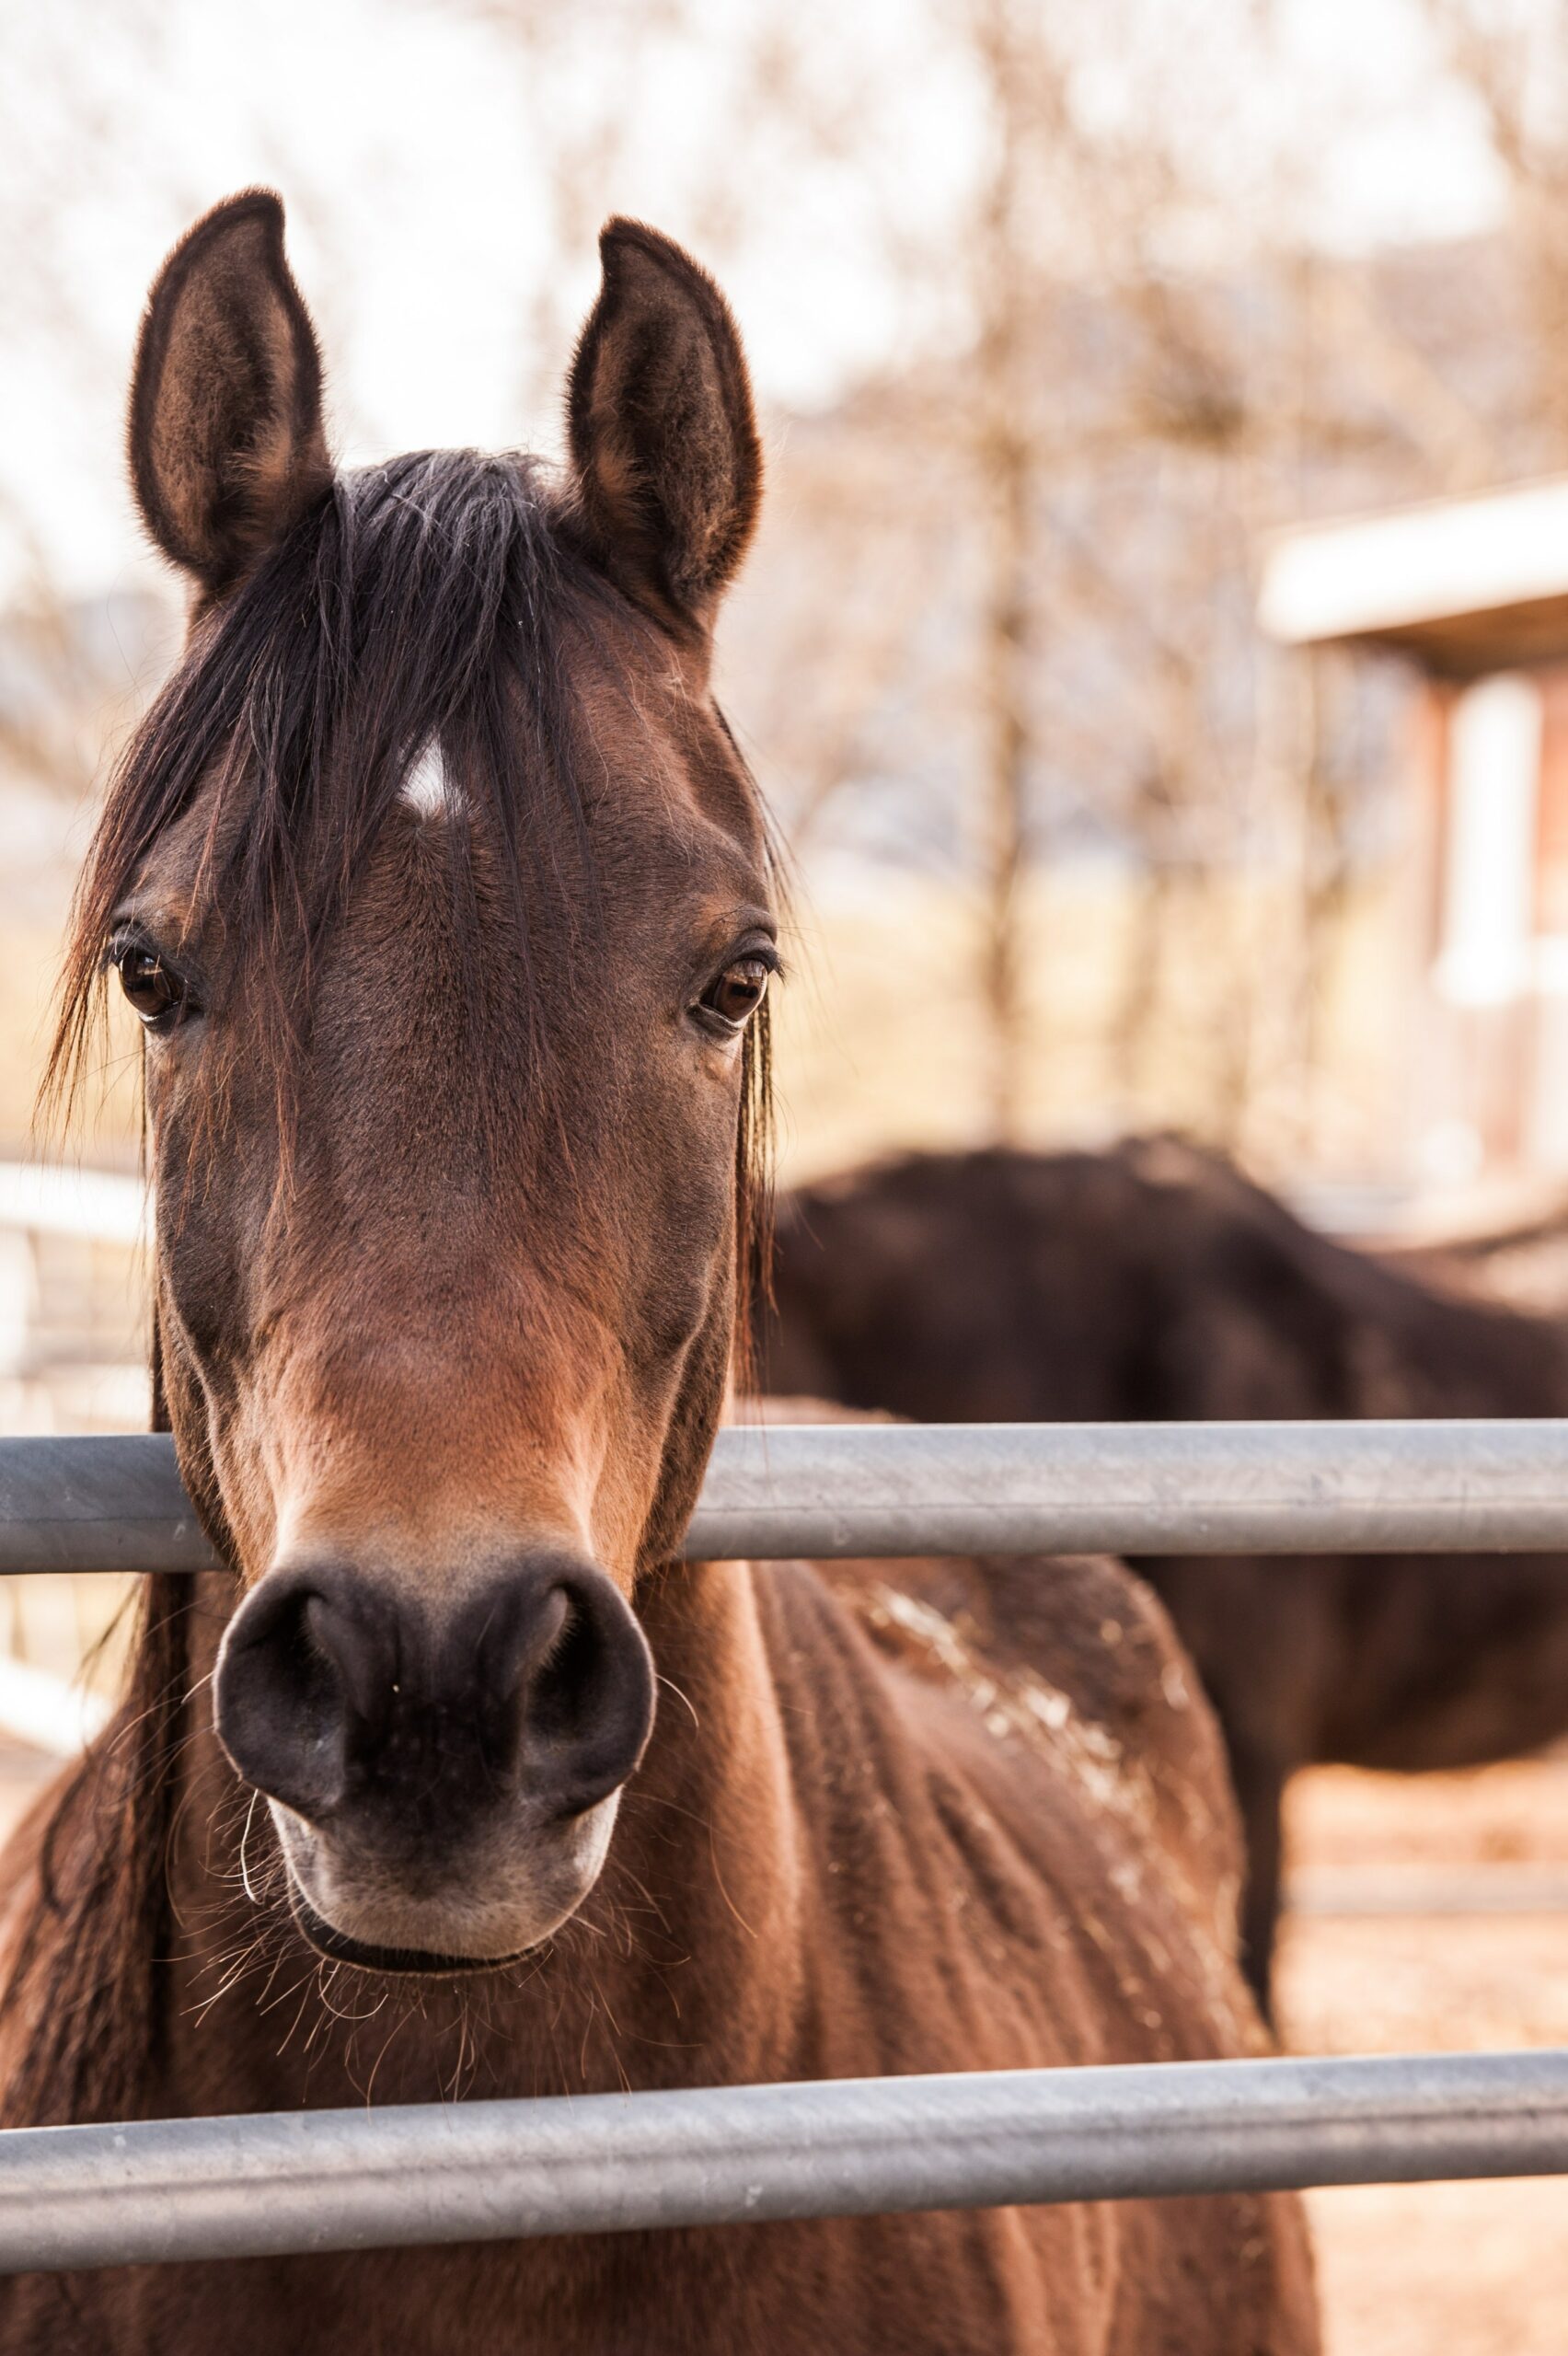 Can Horses Sense Good People?